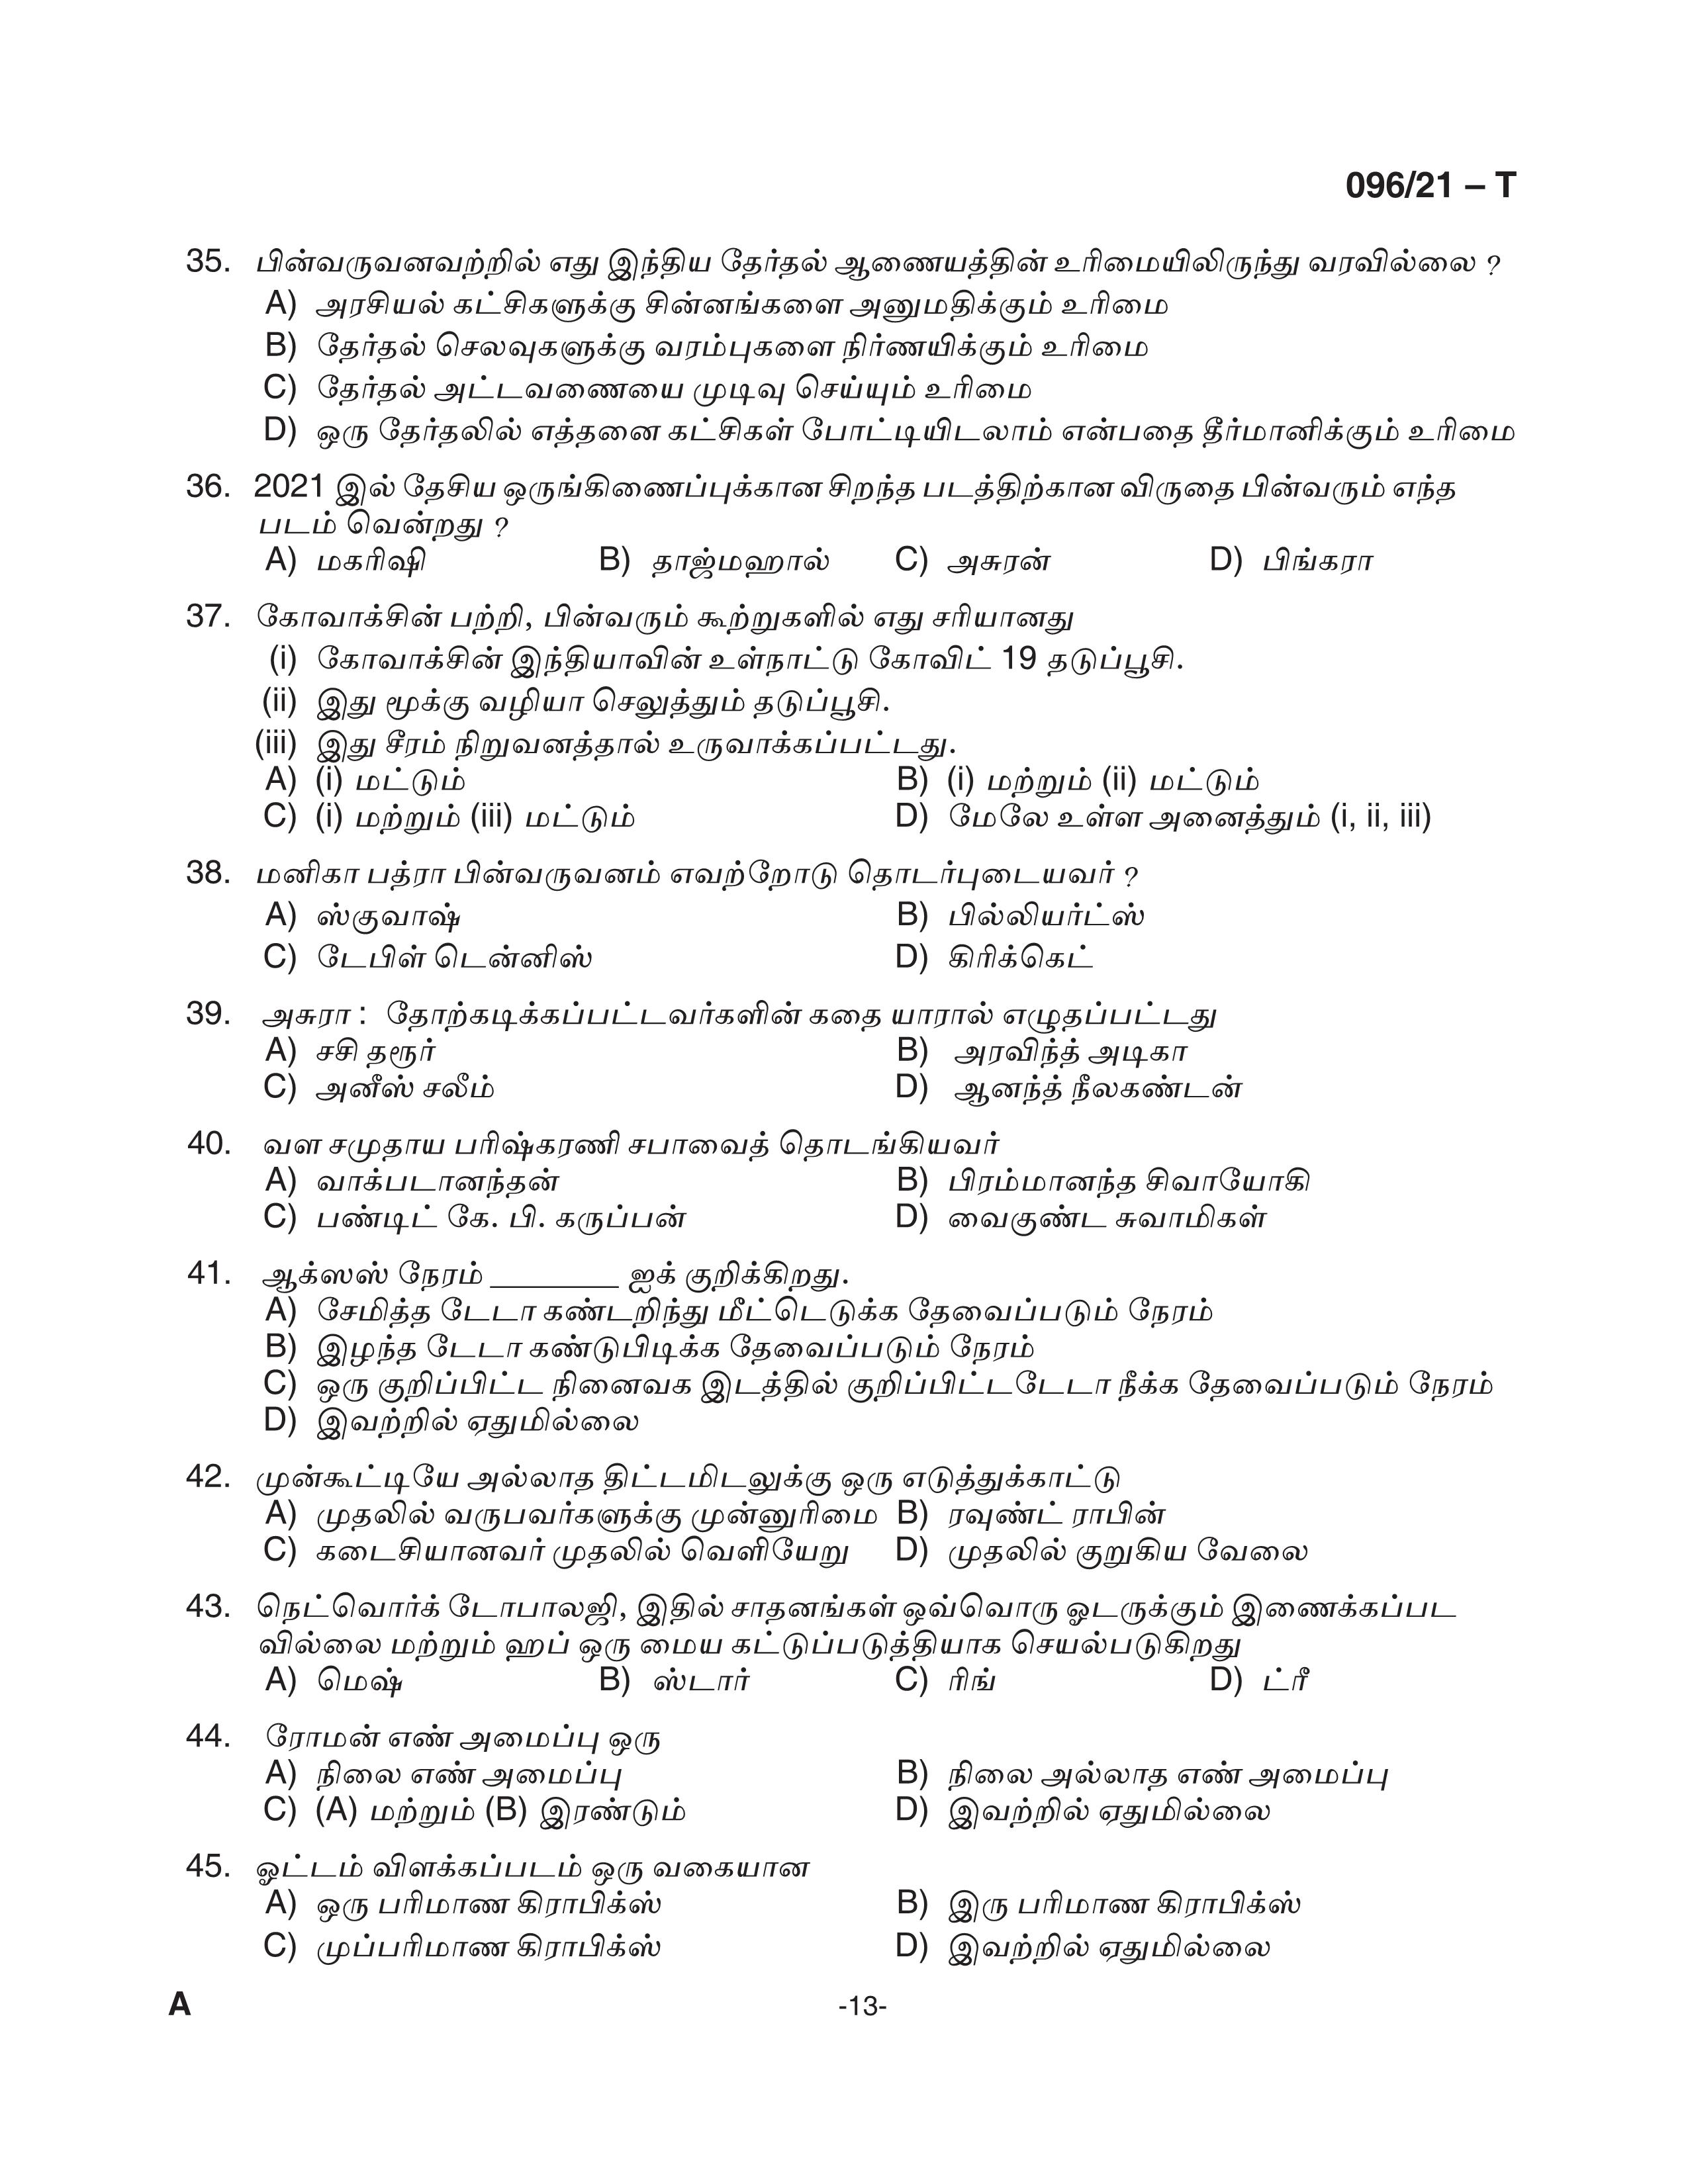 KPSC Degree Level Preliminary Exam Stage II Tamil Exam 2021 Code 09621 T 13